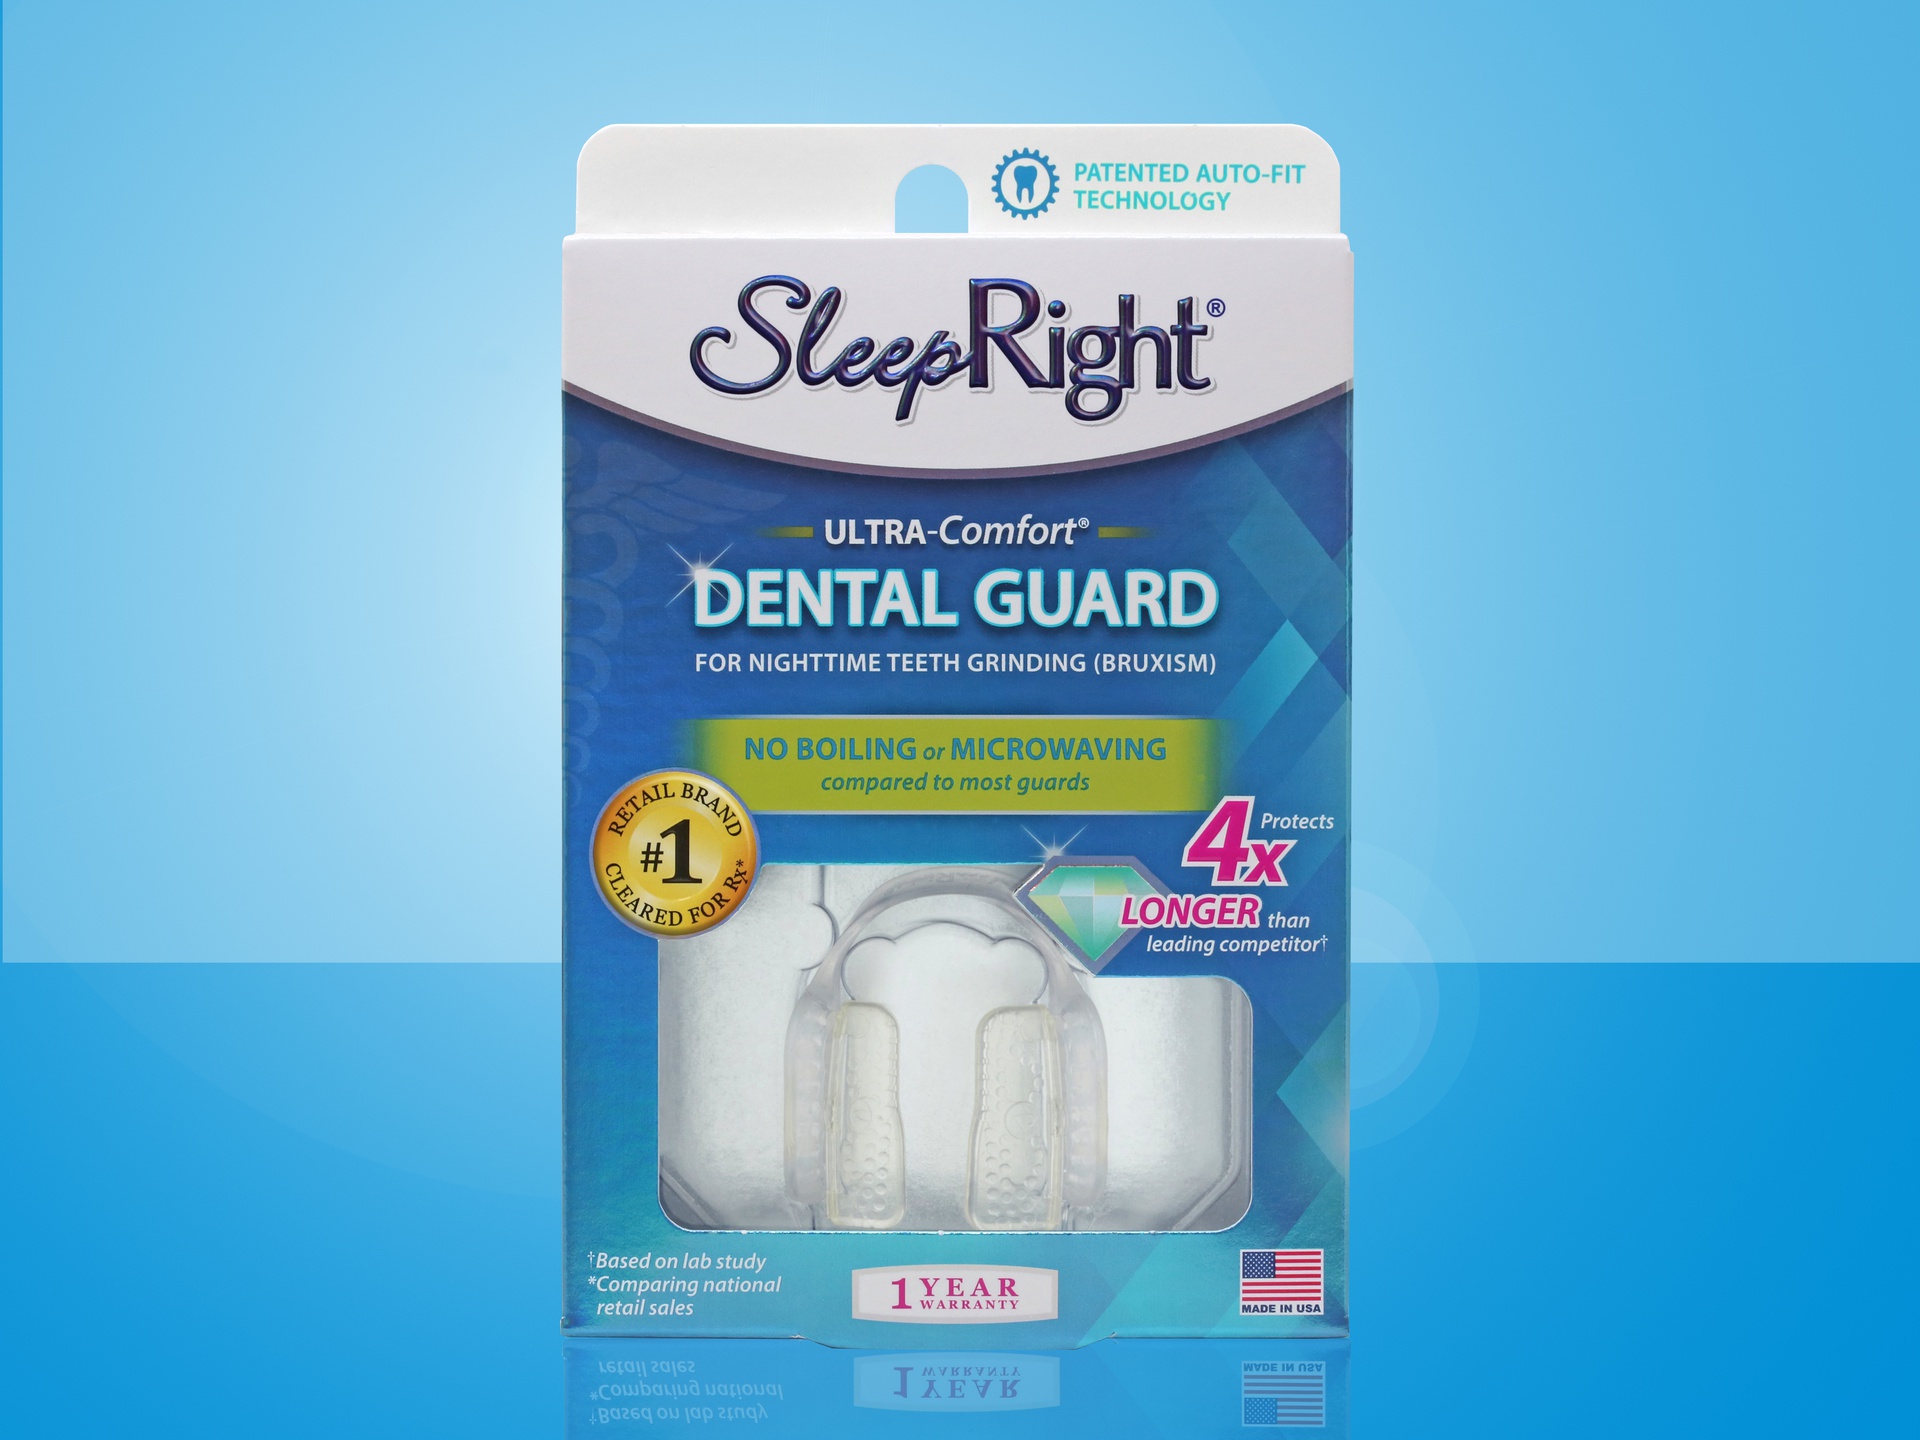 SleepRight Ultra-Comfort Dental Guard packaging